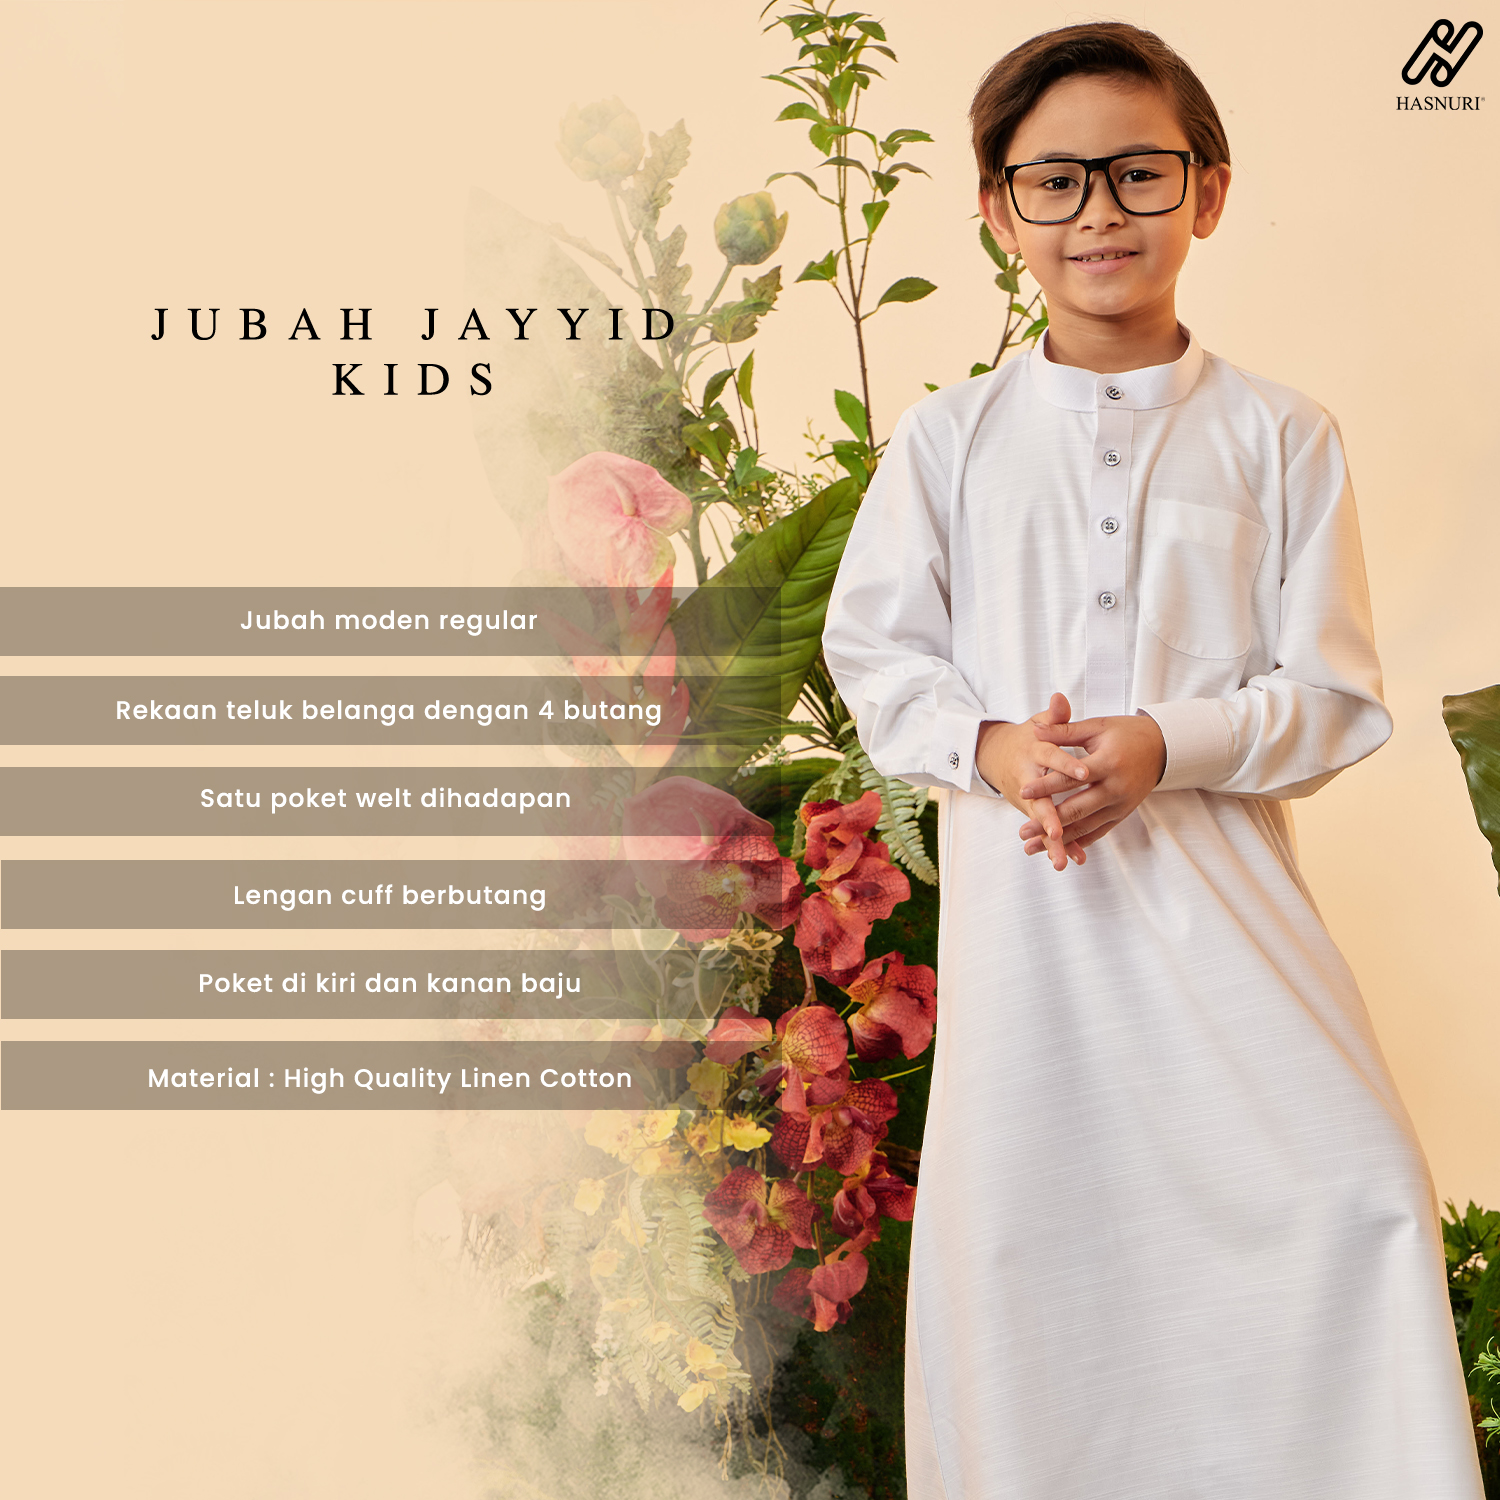 Jubah Jayyid Kids - Black